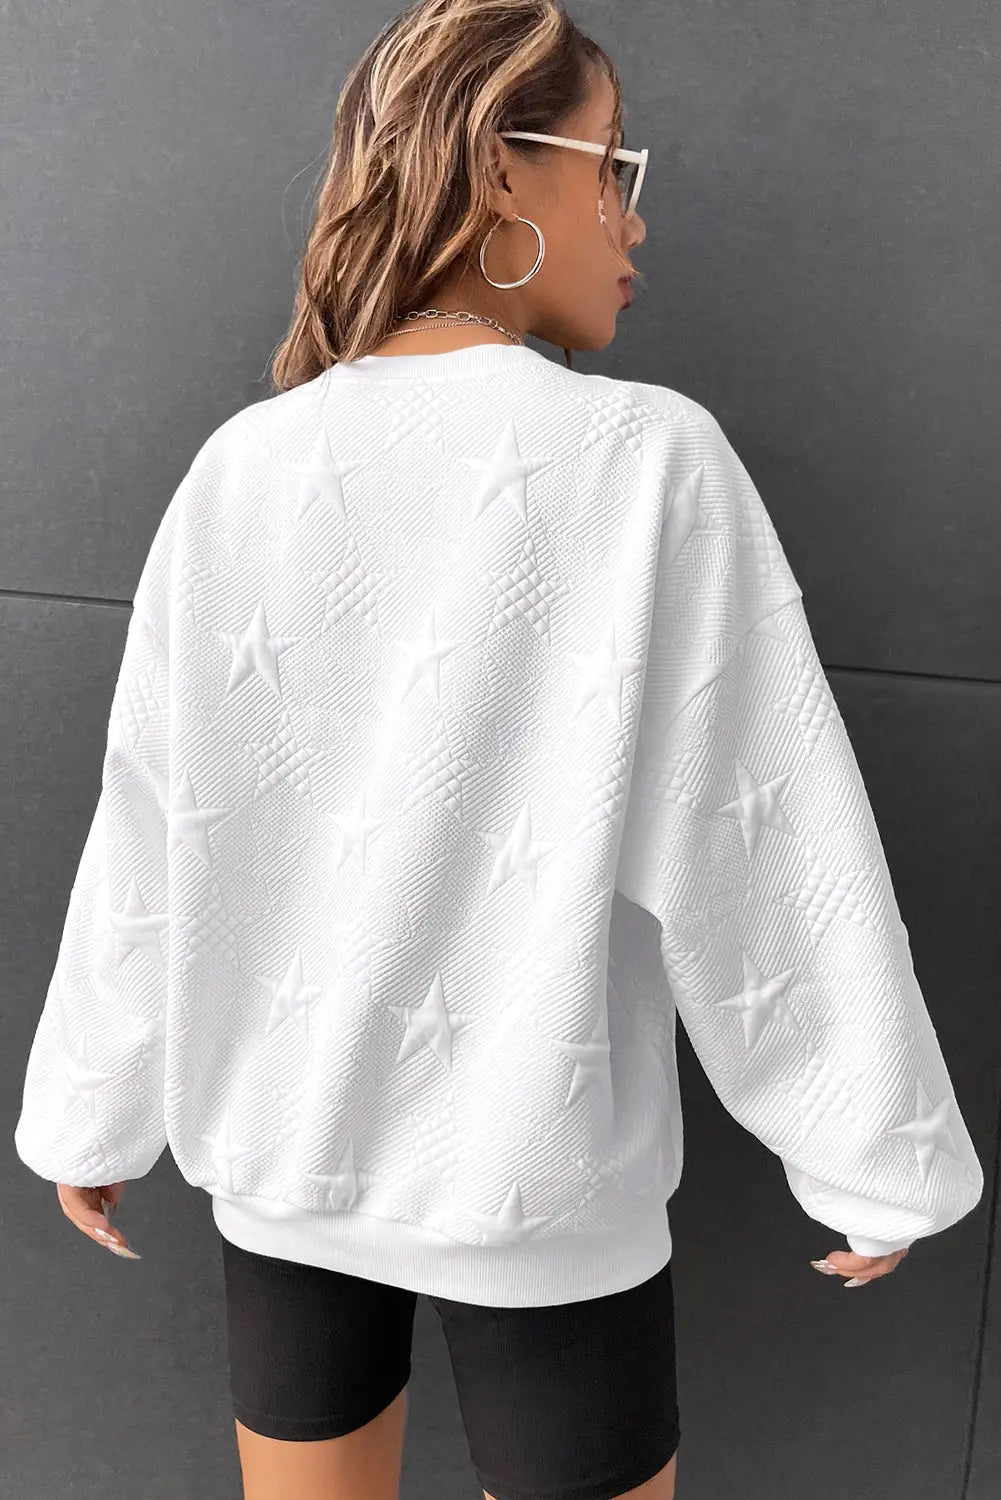 Peach blossom star embossed textured drop shoulder sweatshirt - sweatshirts & hoodies